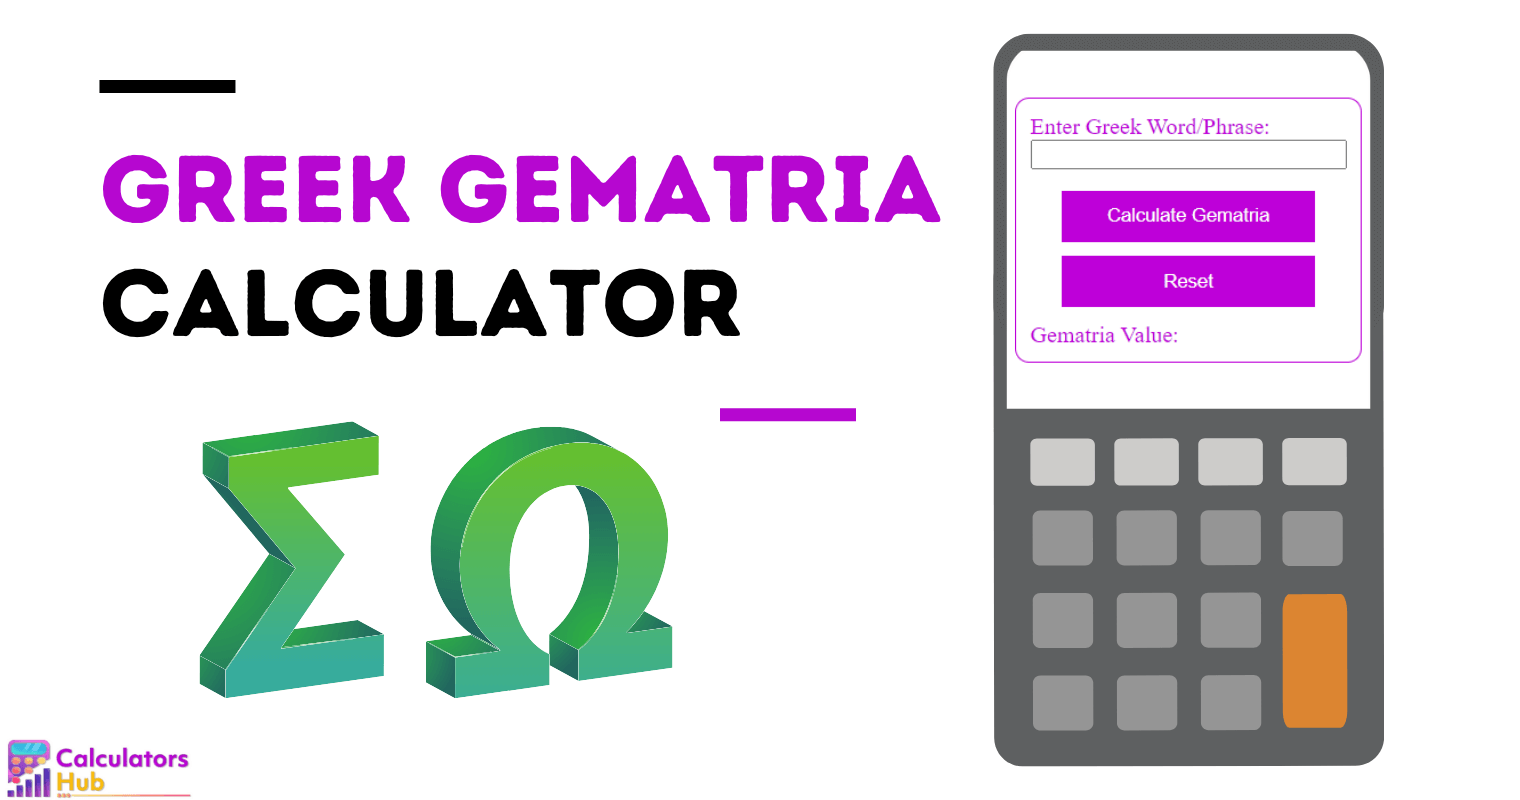 Greek Gematria Calculator